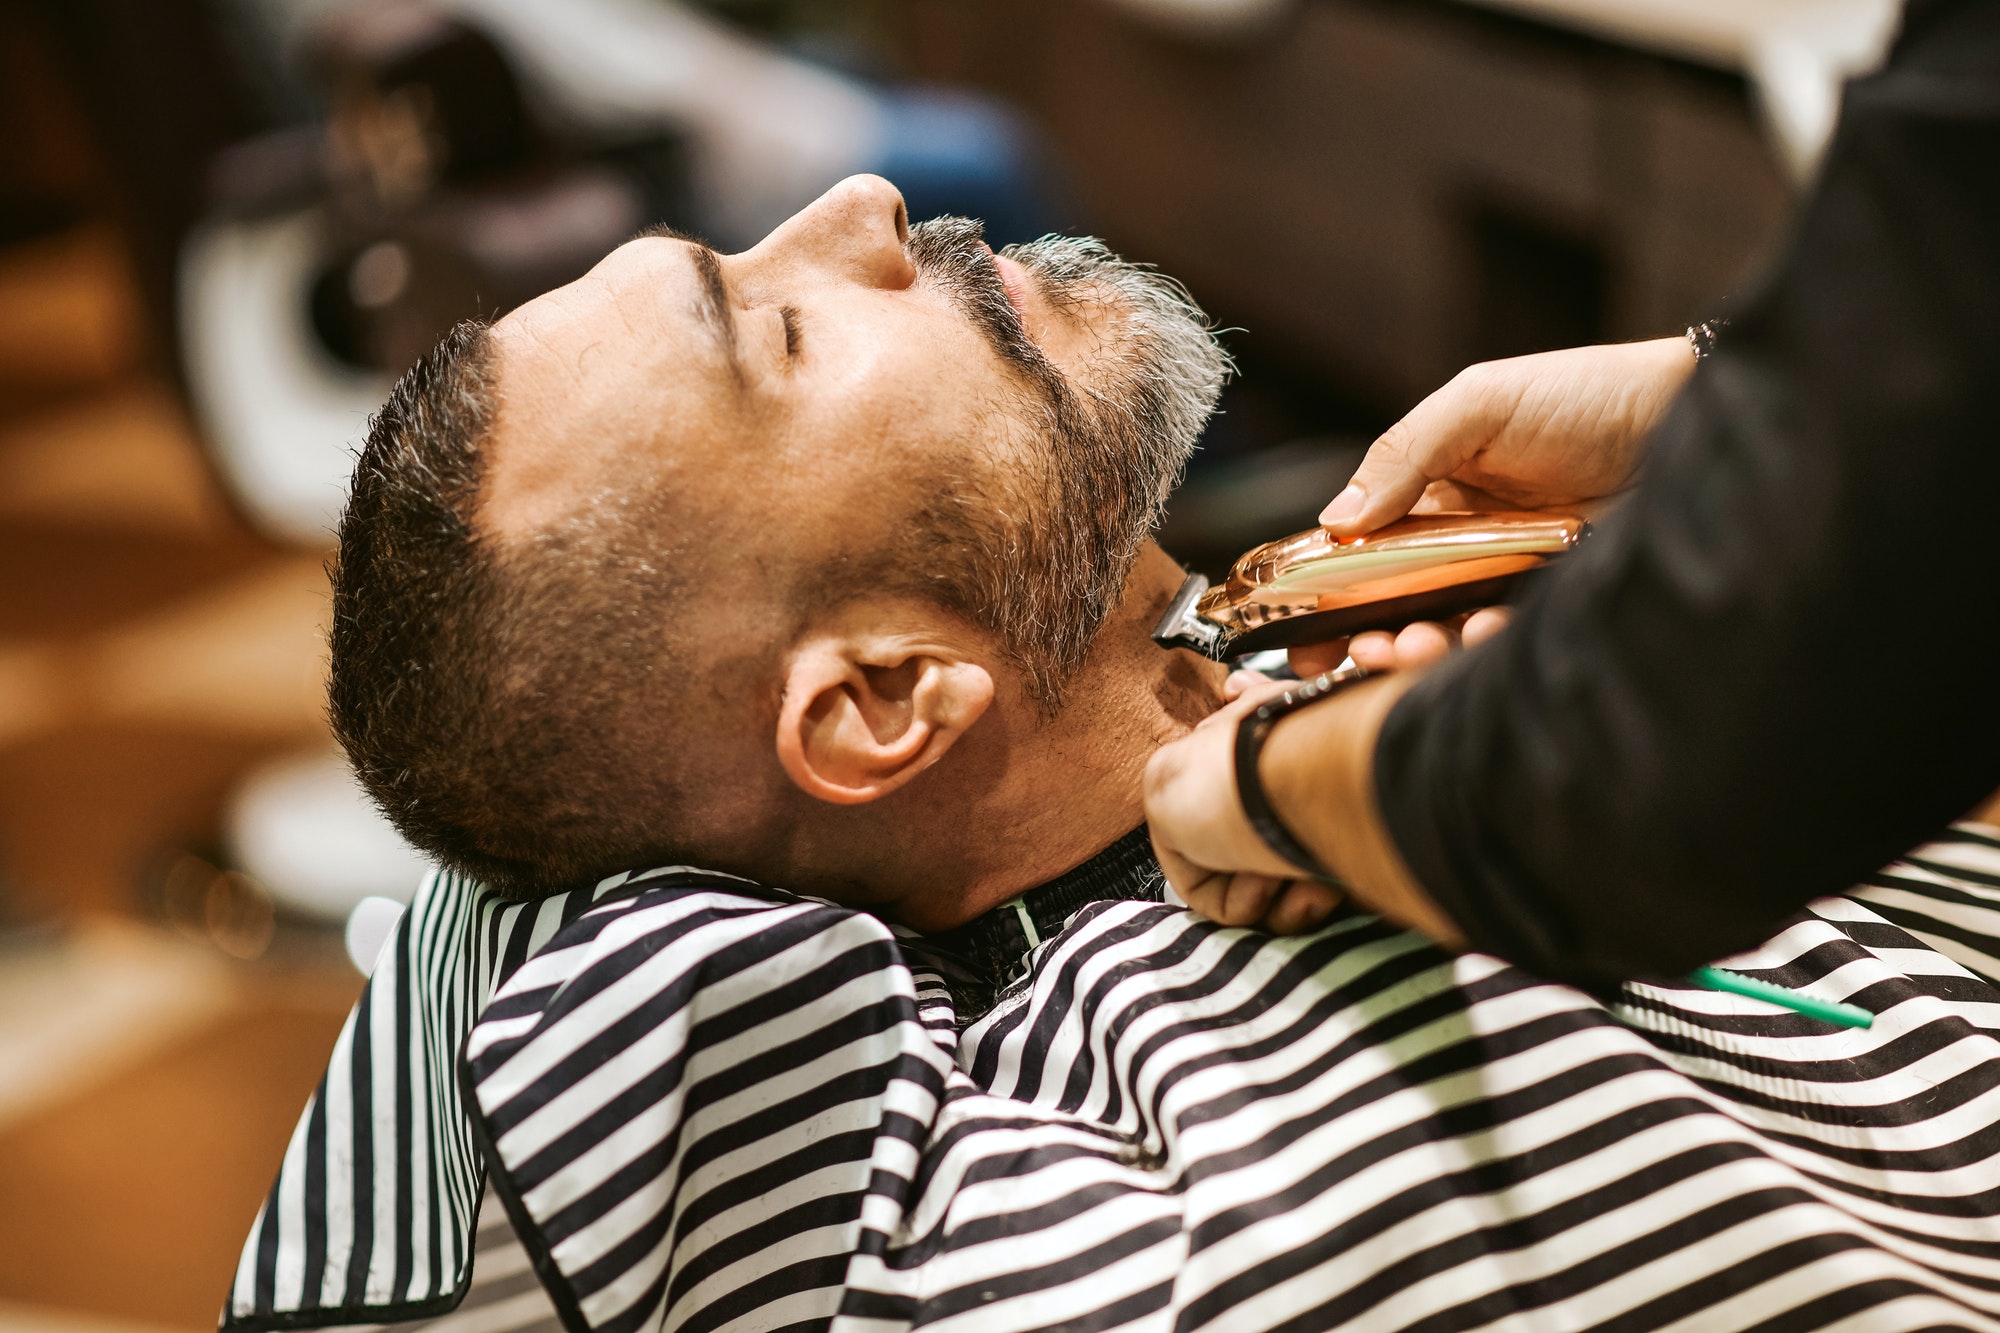 Barber trims the beard of the customer